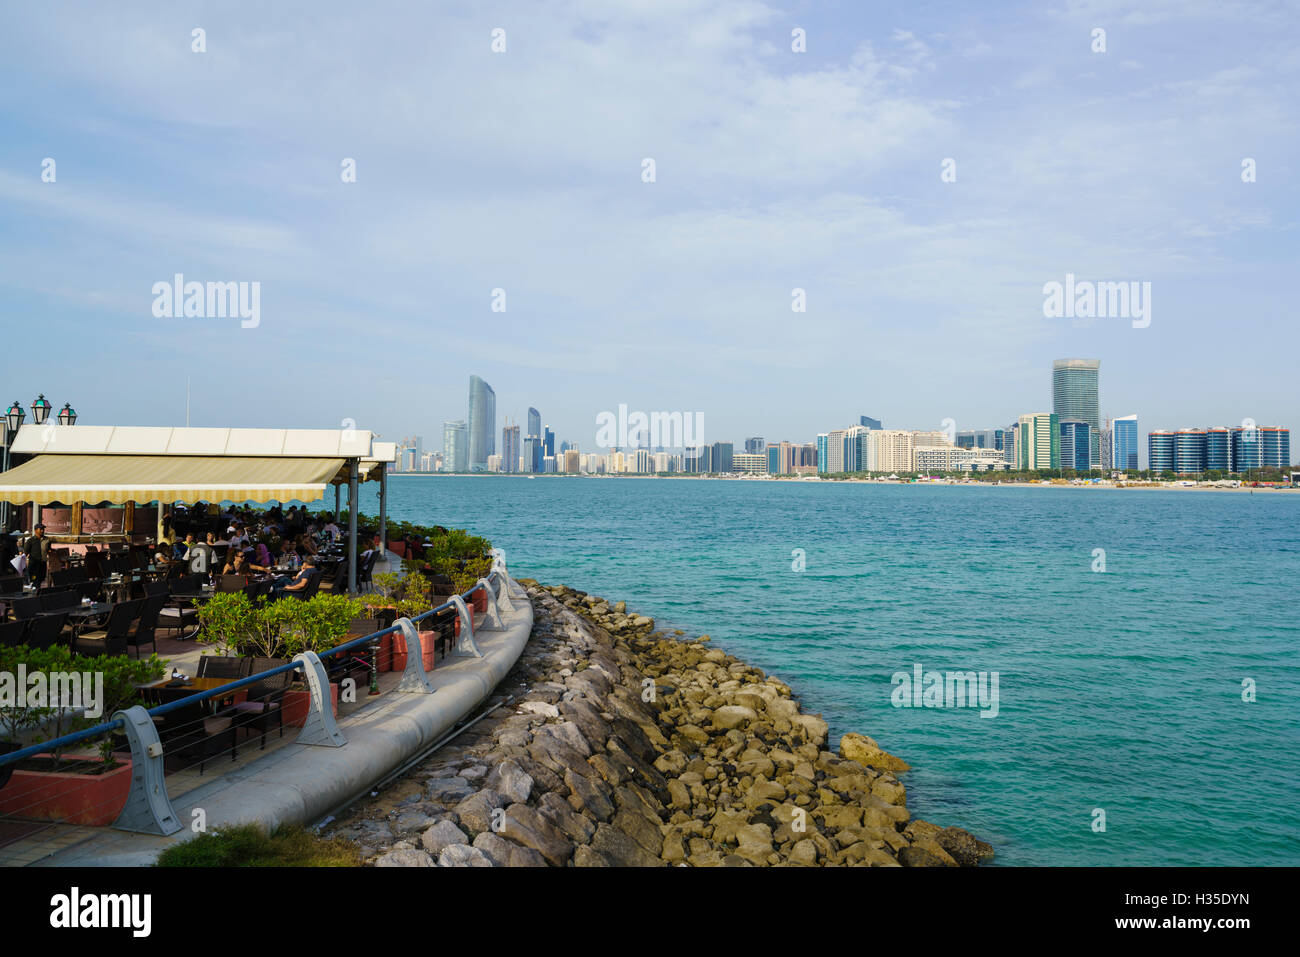 Restaurant overlooking the skyline across the Gulf, Abu Dhabi, United Arab Emirates, Middle East Stock Photo